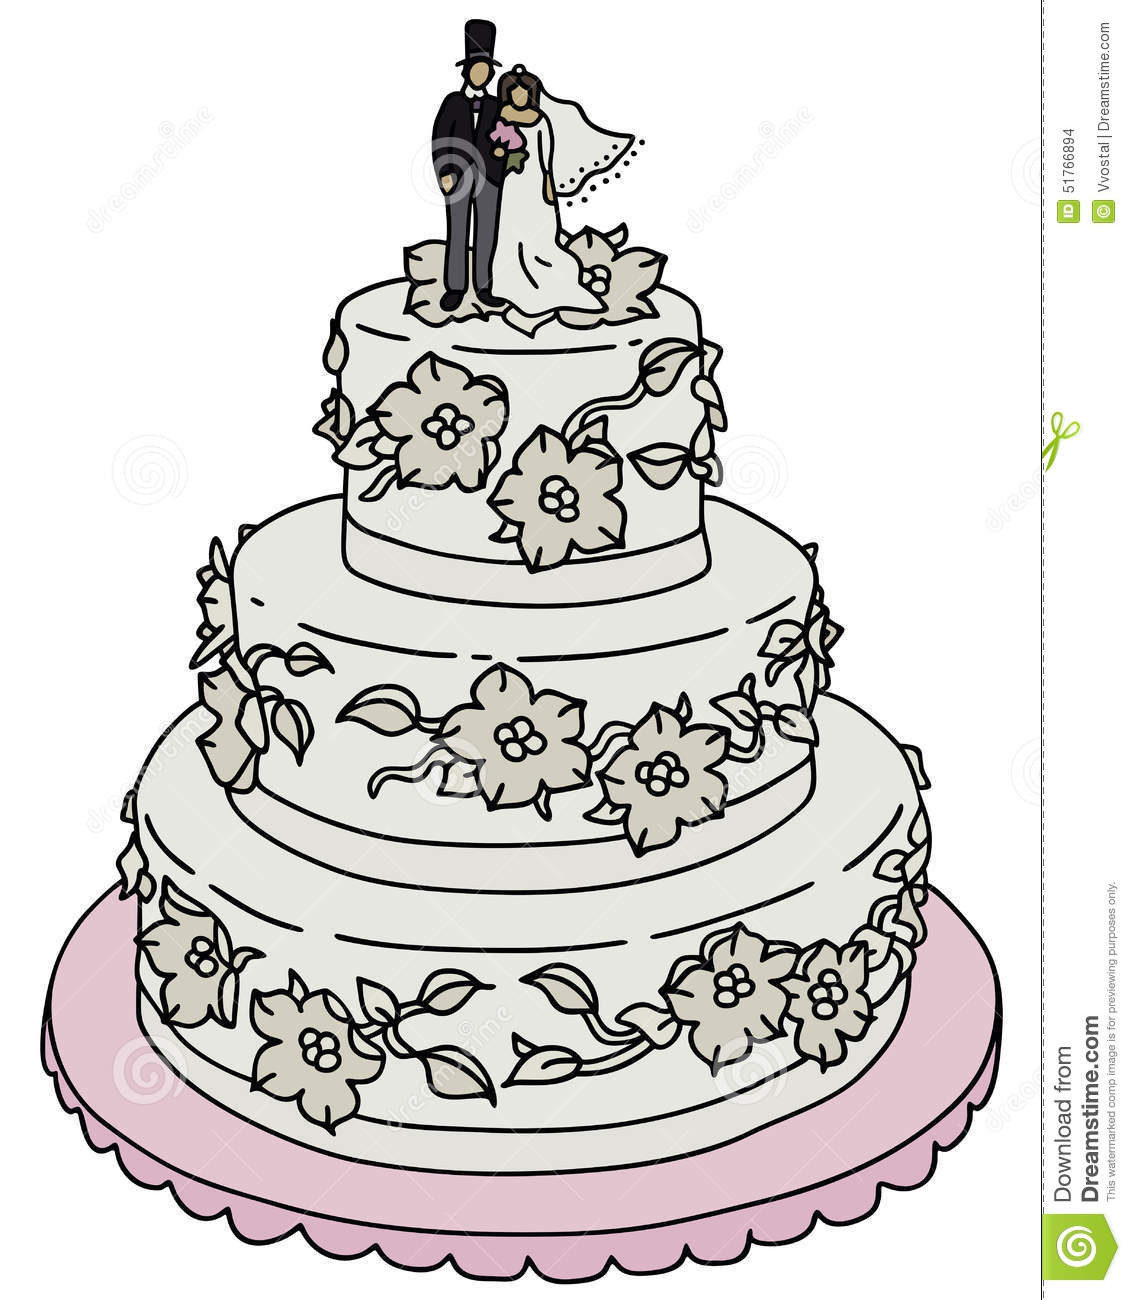 Wedding Cakes Clip Art
 Wedding cake stock vector Illustration of bride wedding